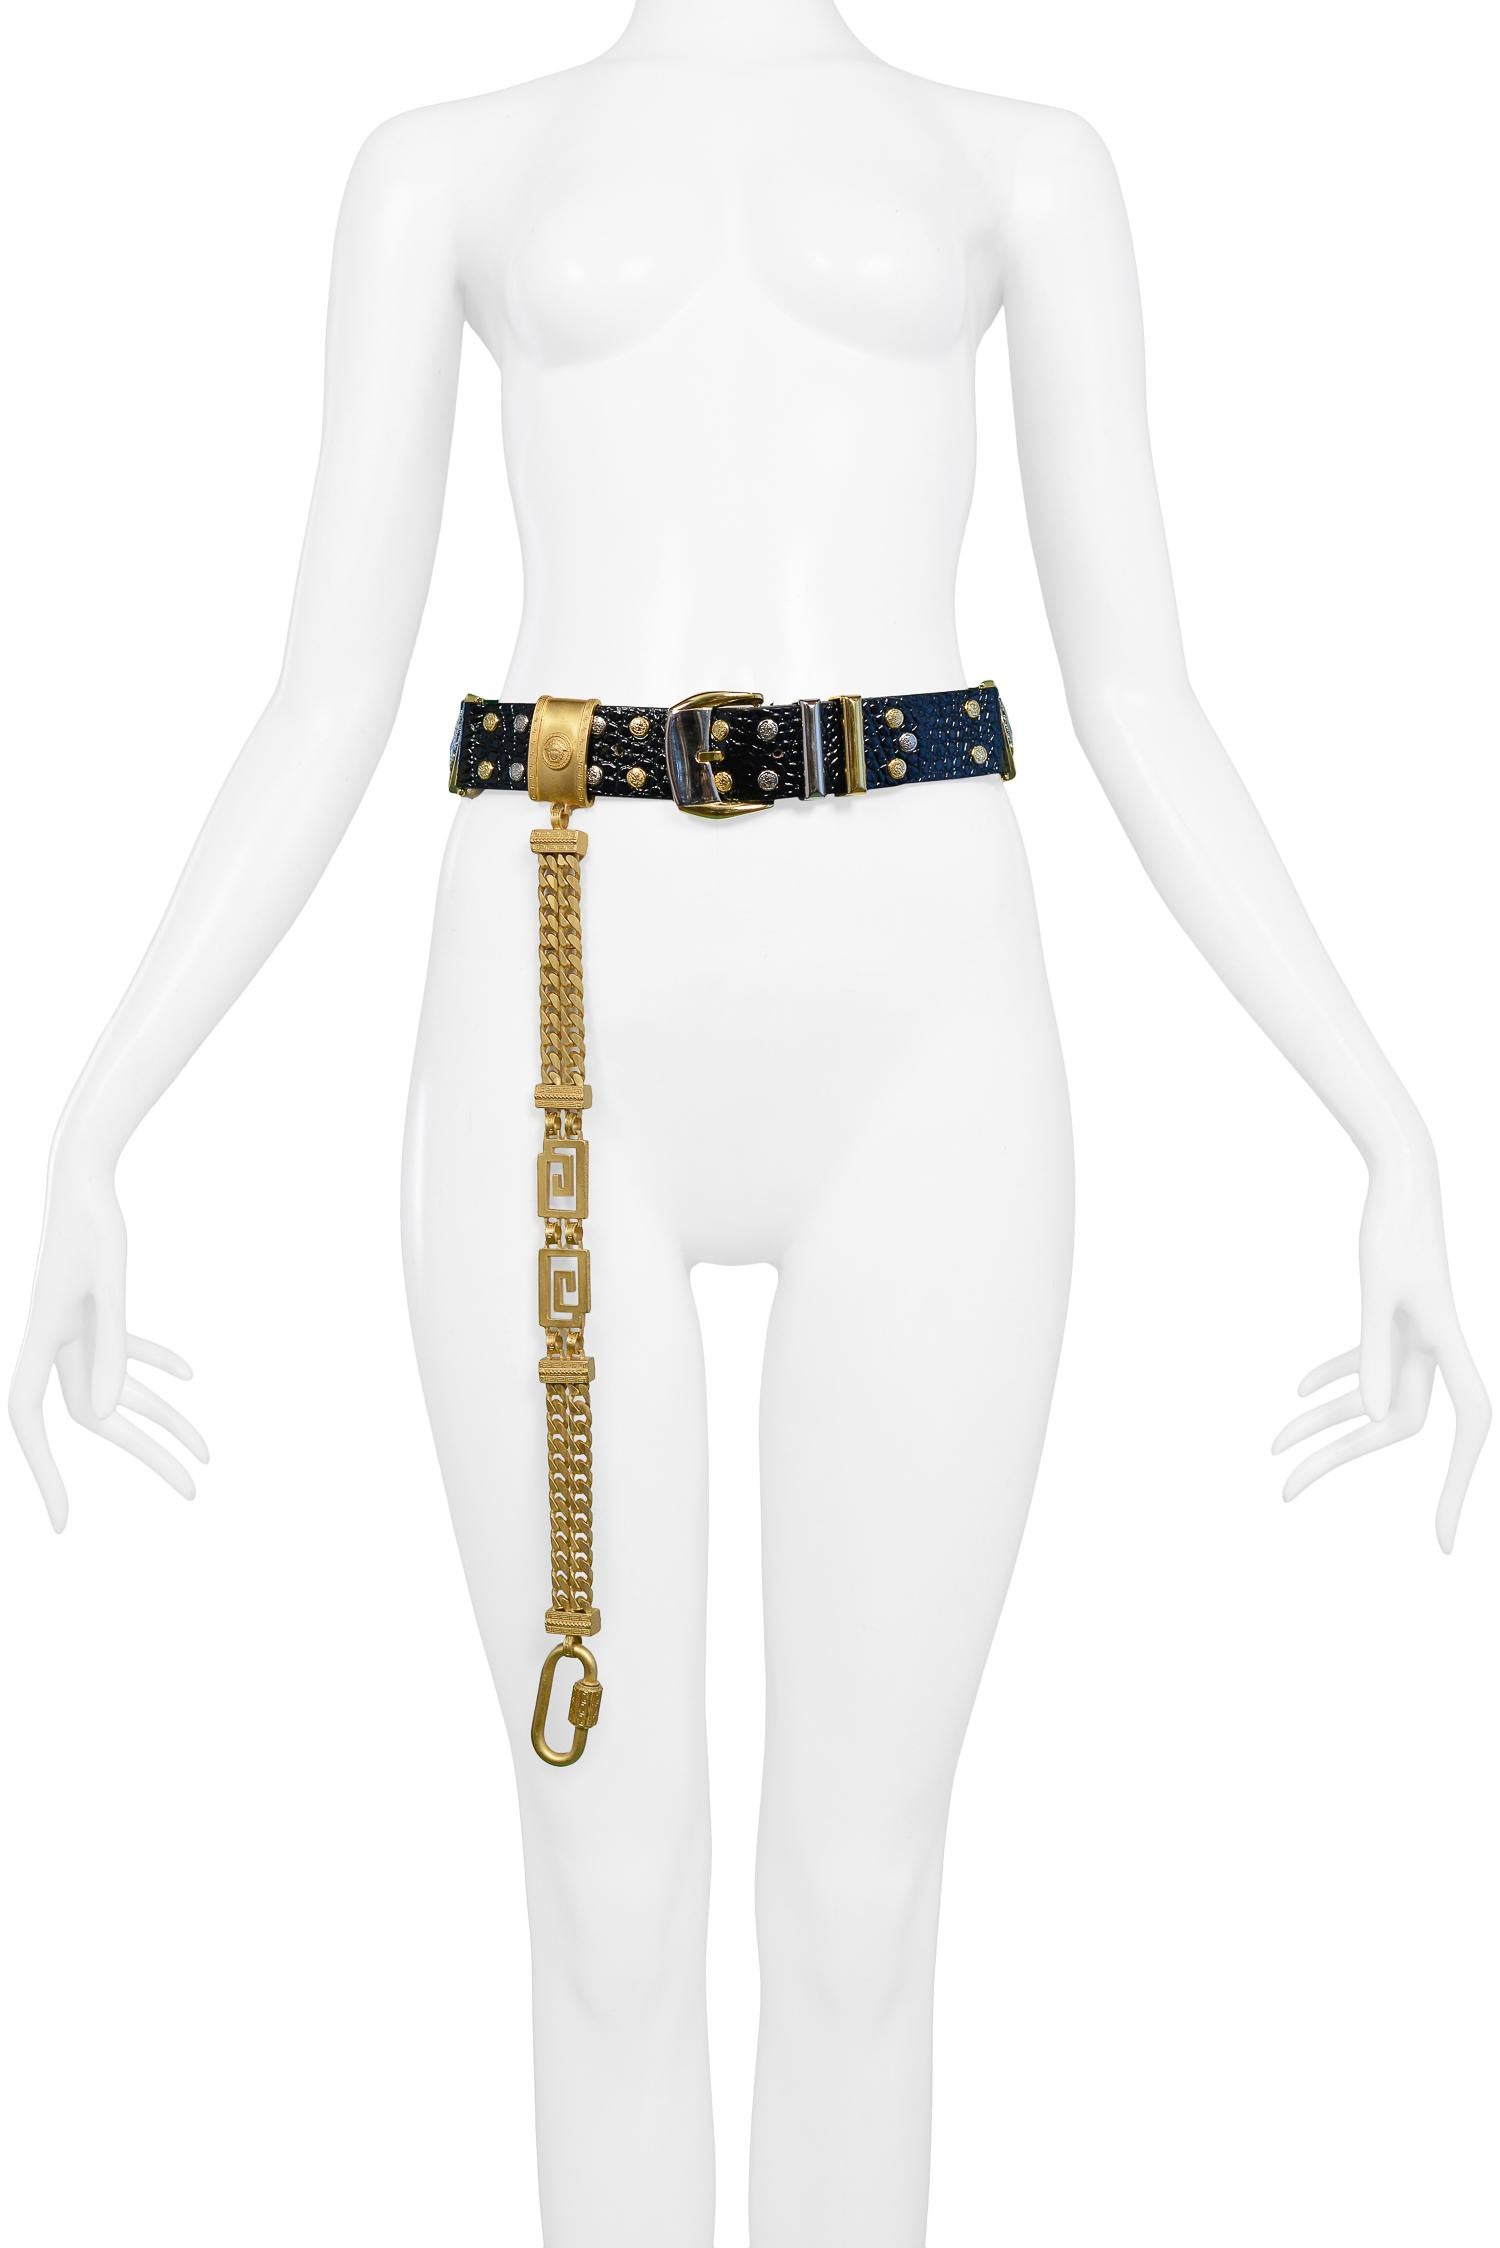 Vintage Gianni Versace gold-tone pocket chain featuring decorative greco links, screw closure keyring, belt slide detail & Medusa emblem. 

*Belt not included* 

Excellent Condition.
